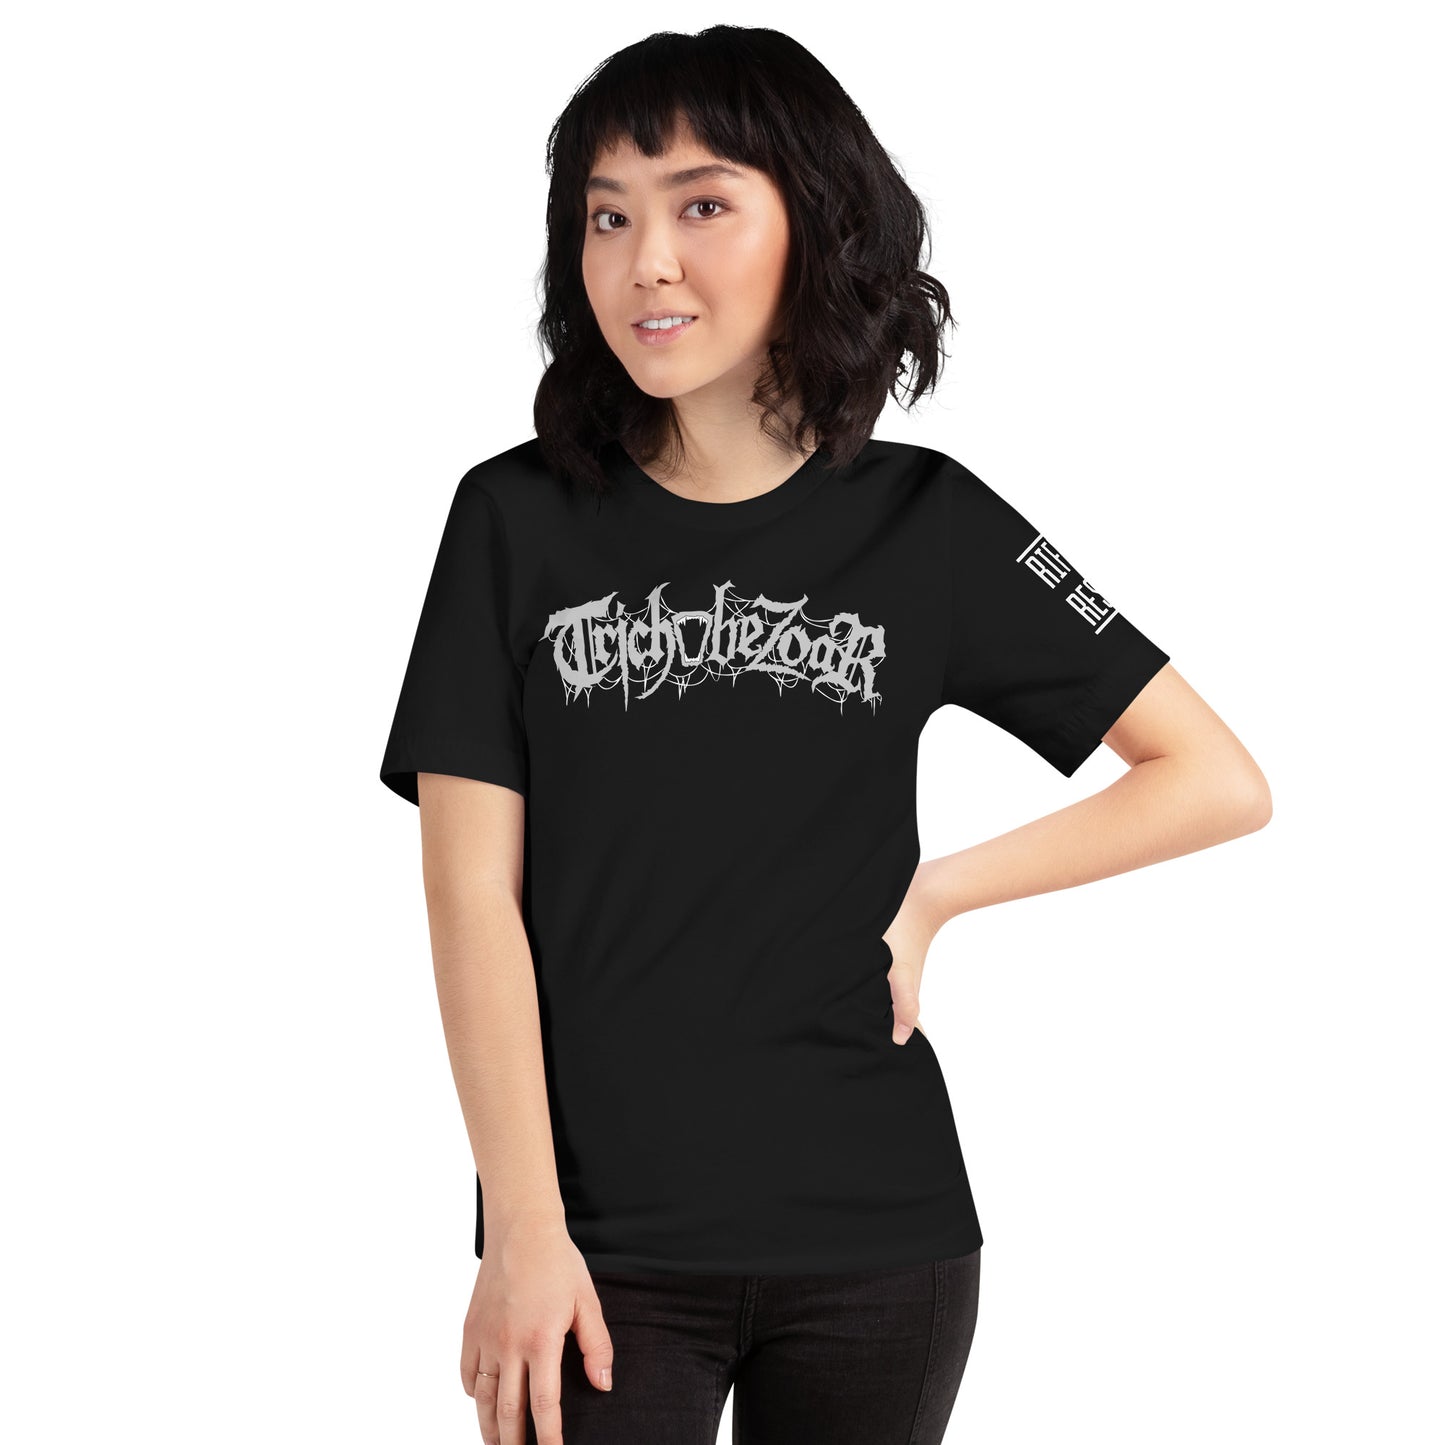 Trichobezoar (Grey Front and Back Design) Unisex t-shirt